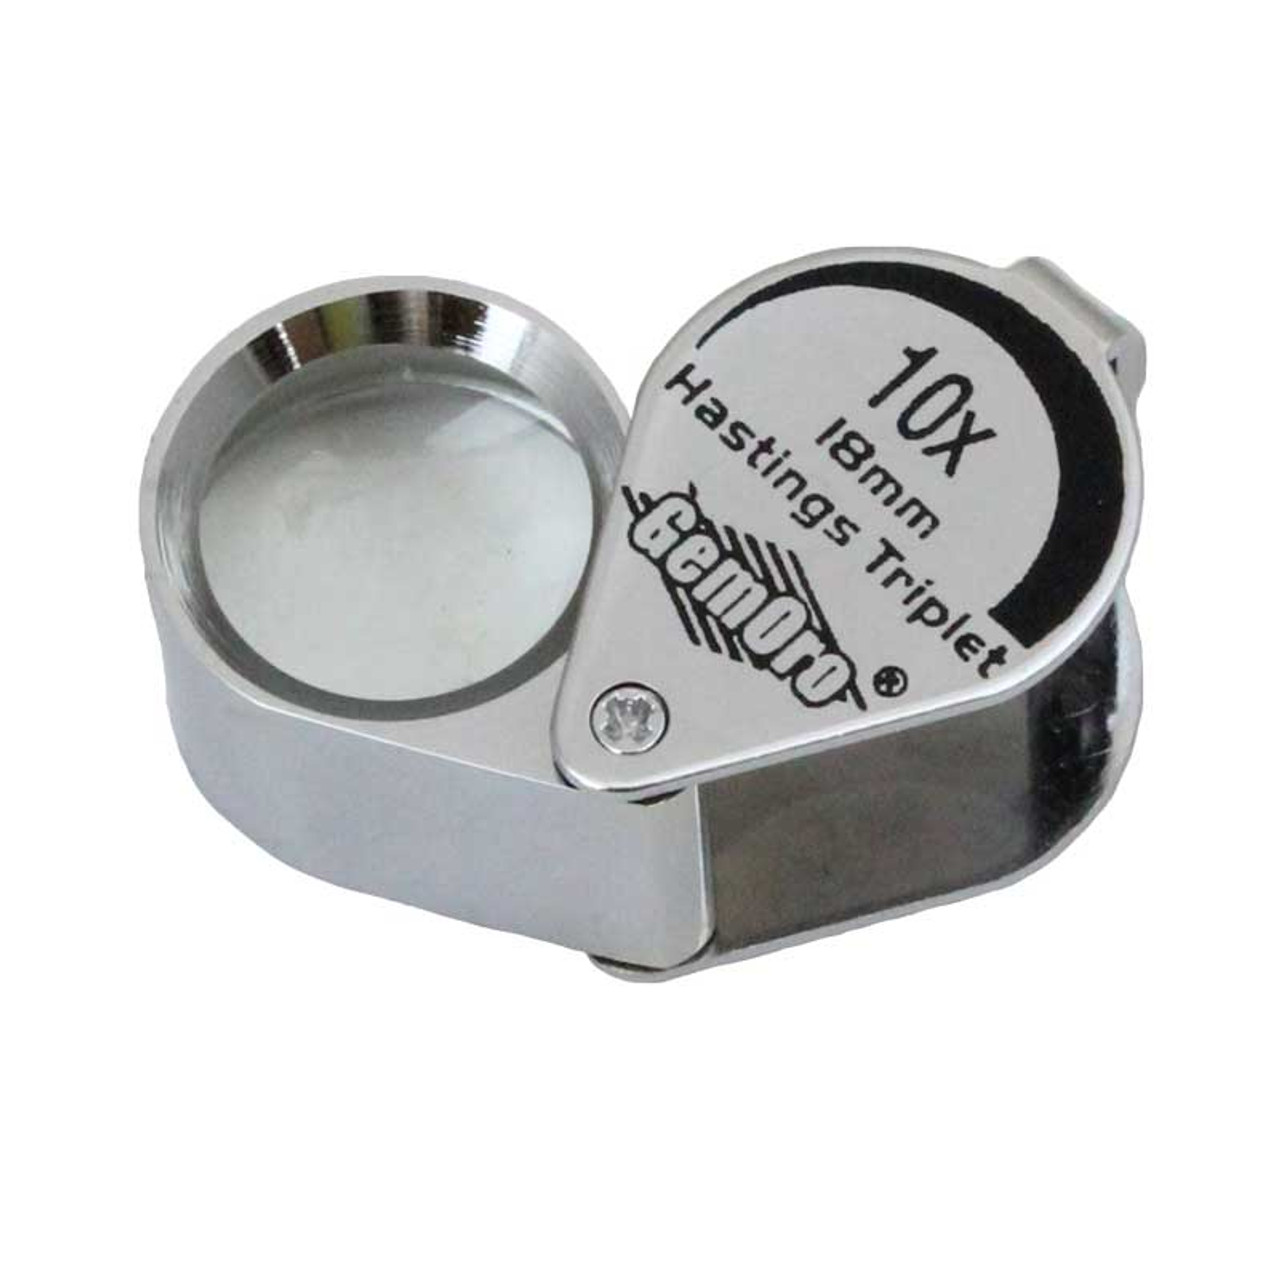 10X Triplet Lens Eye Loupe Jewelers Magnifier Chrome